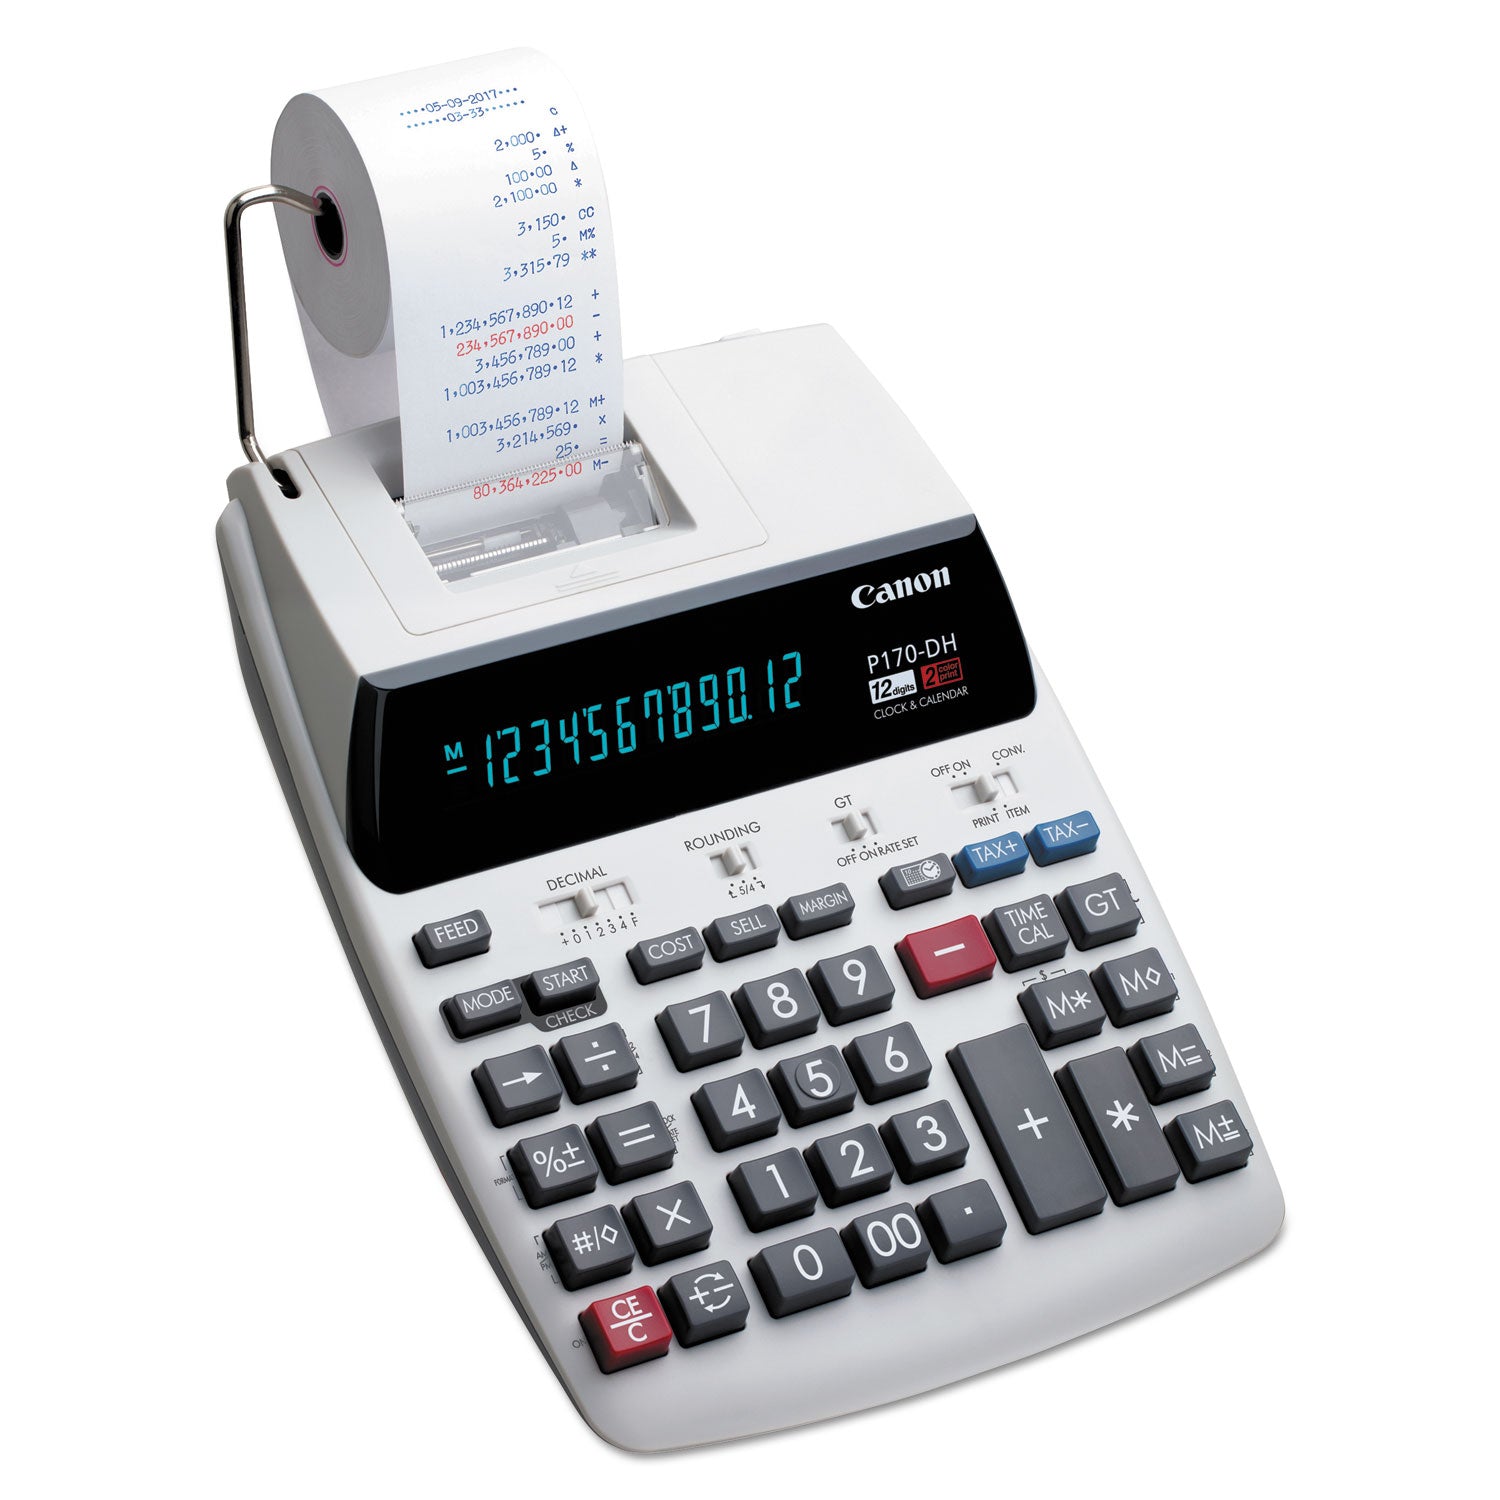 p170-dh-3-printing-calculator-black-red-print-23-lines-sec_cnm2204c001 - 1